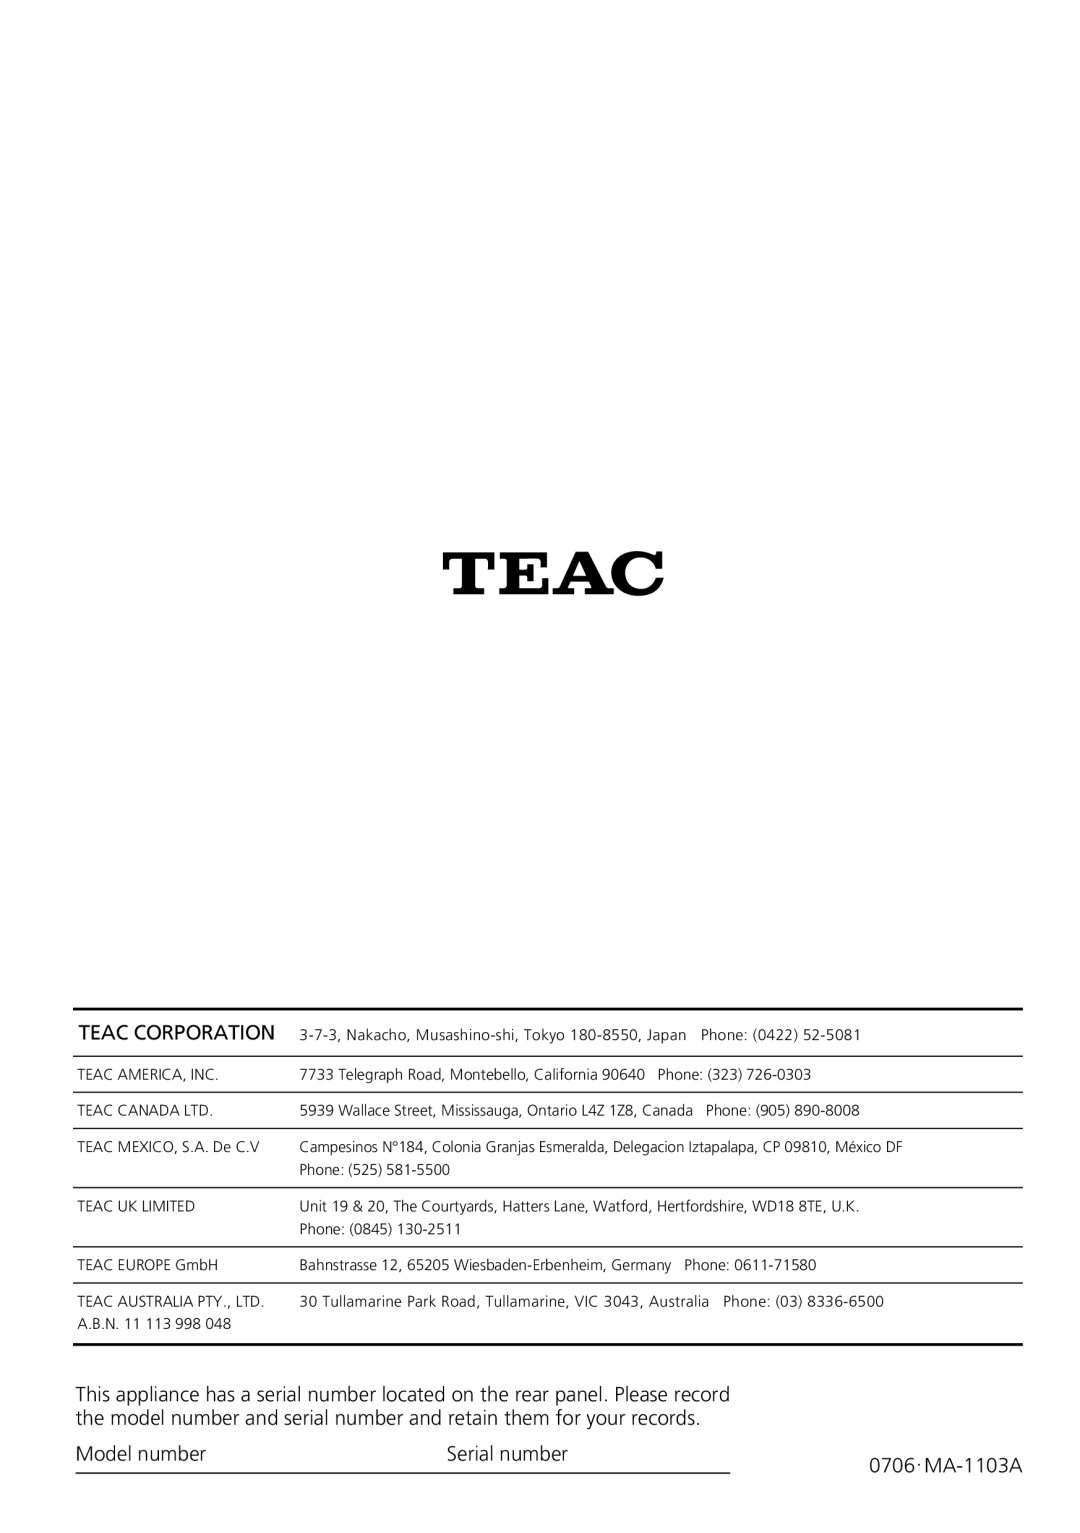 Teac GR-7i owner manual Teac Corporation, Model number, Serial number, MA-1103A 